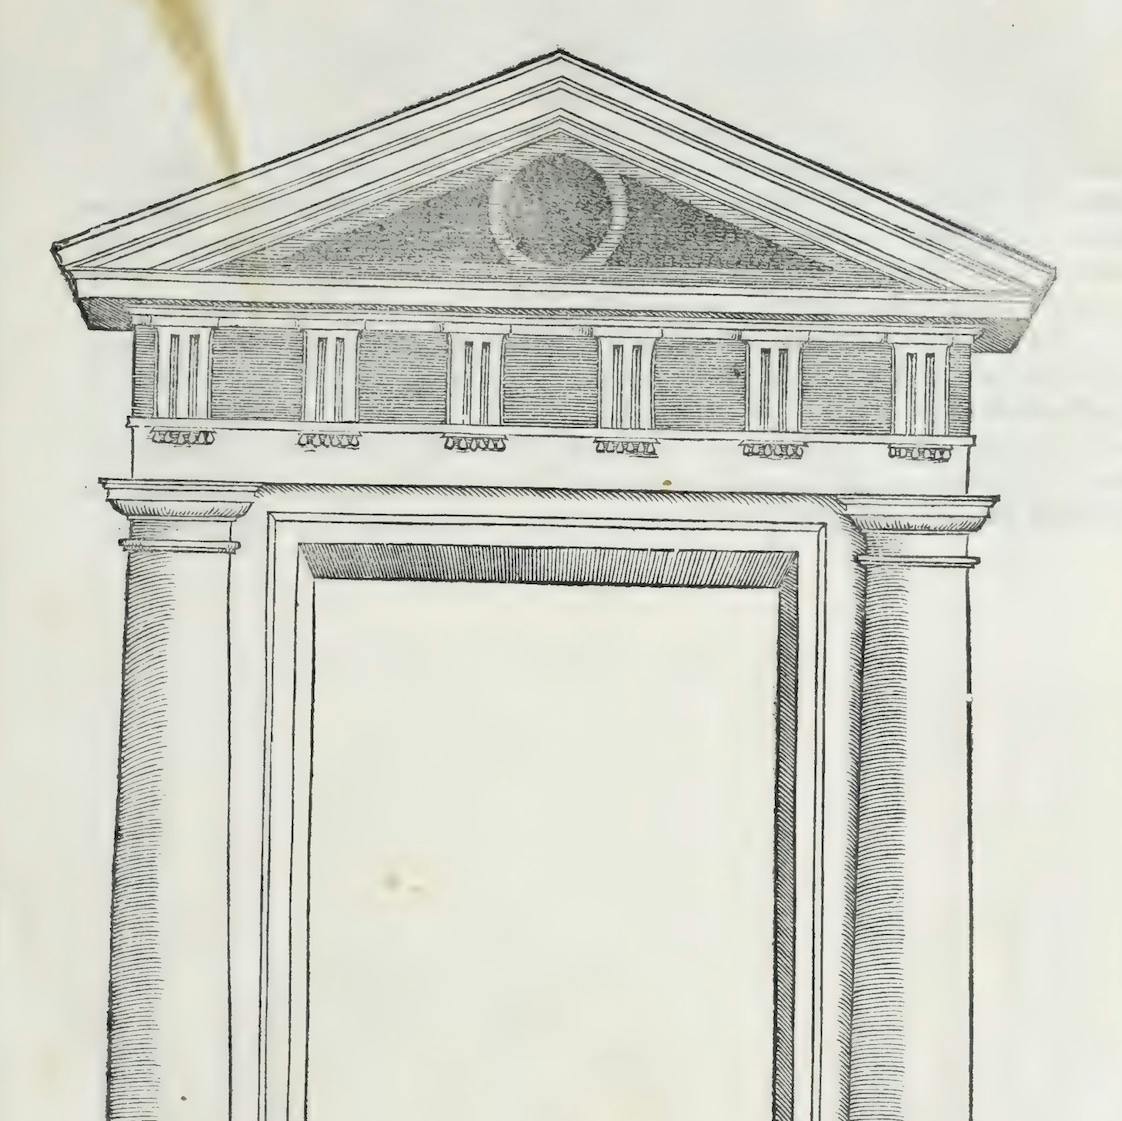 Porte dorique de Sebastiano Serlio